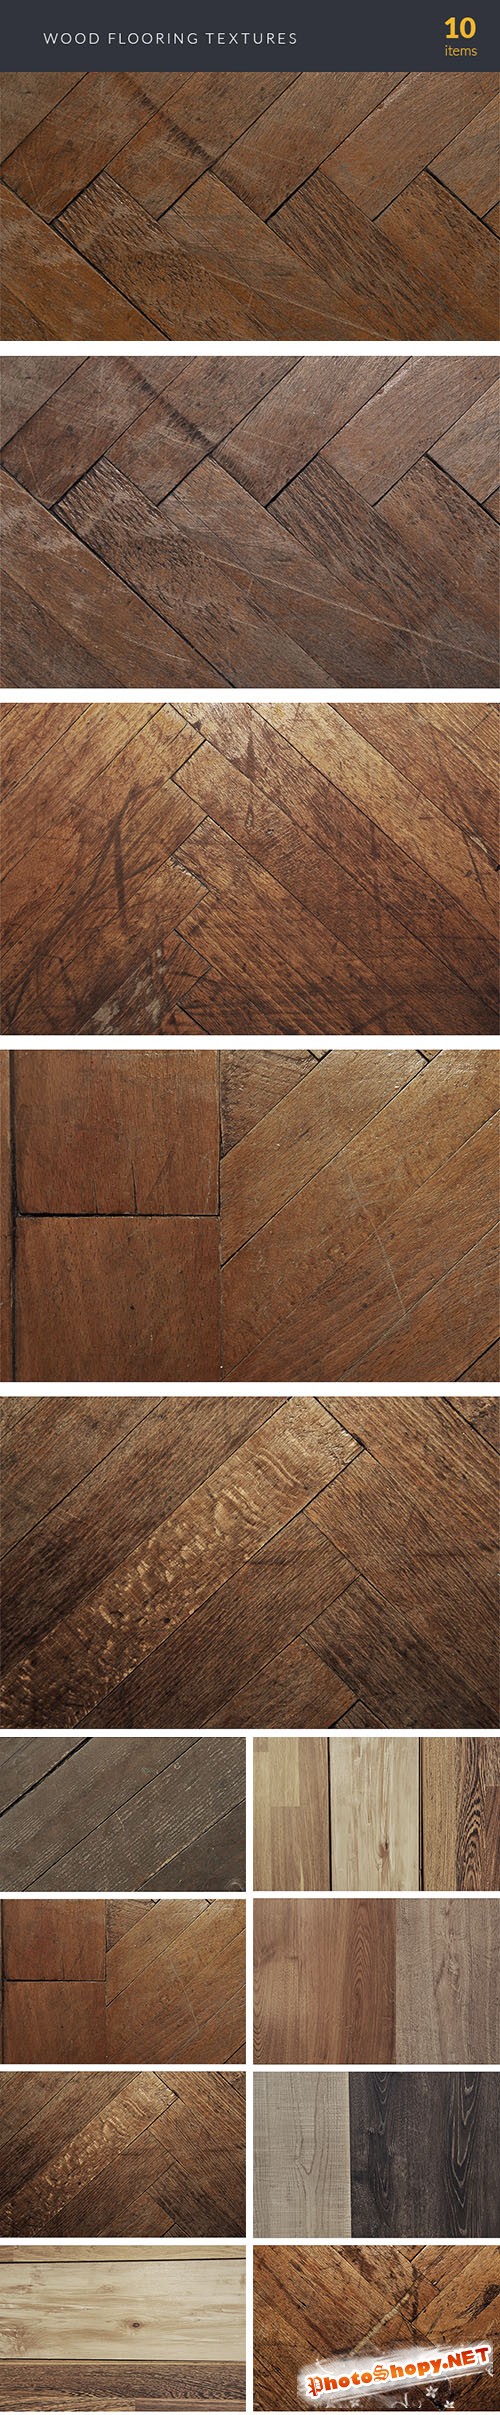 Designtnt - Plywood Textures Set 1